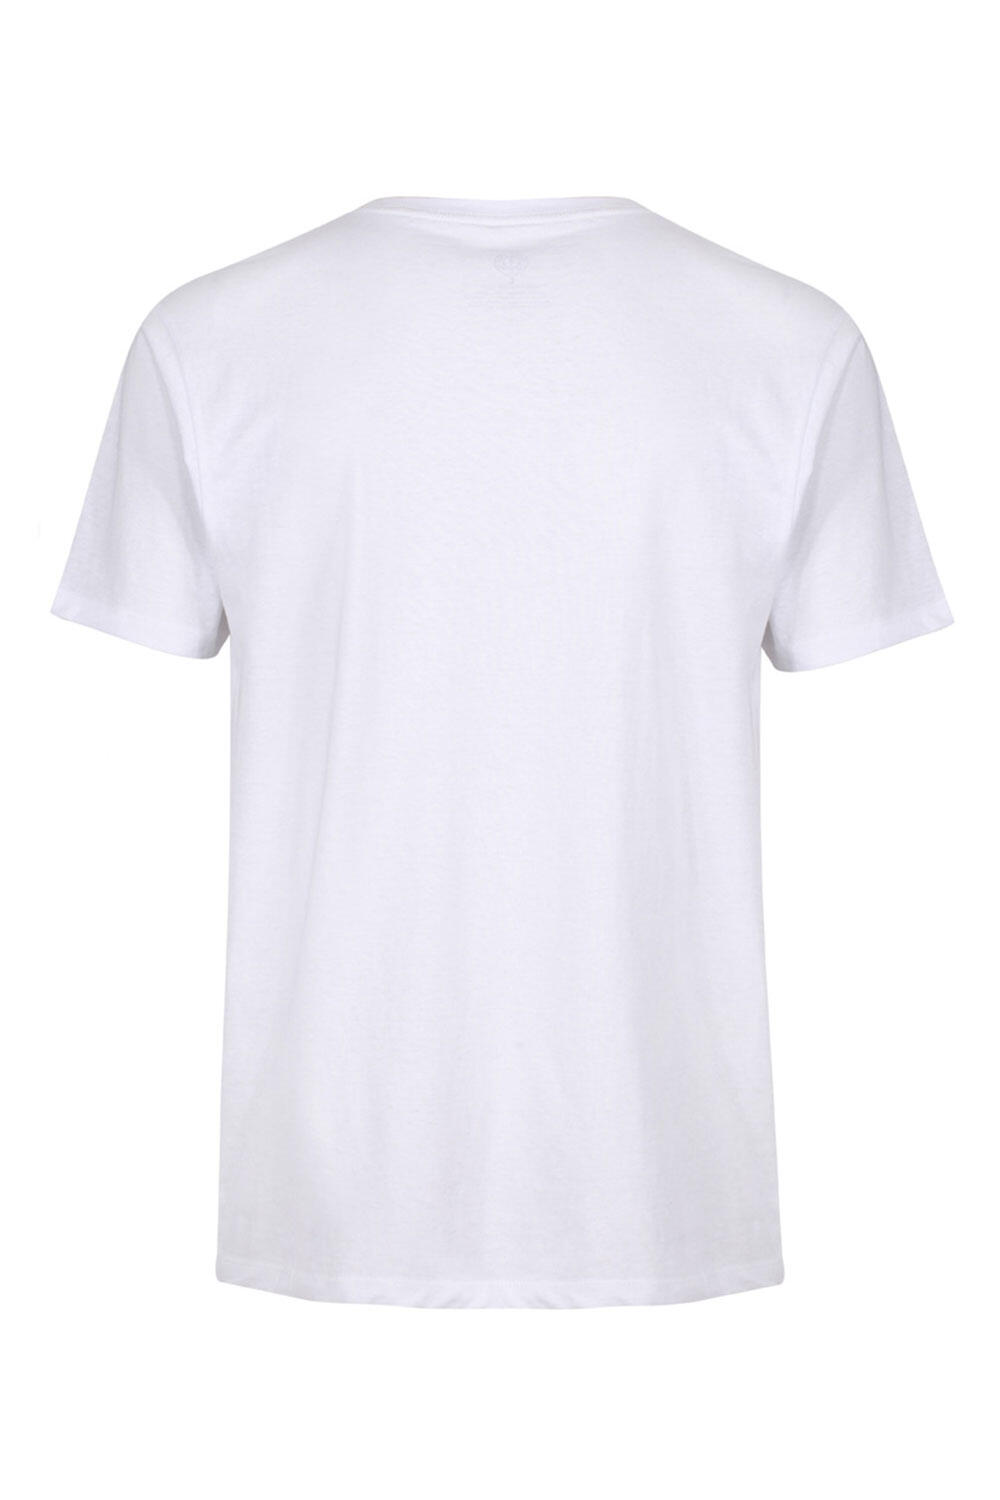 Men's Gold's Gym Muscle Joe Print T-Shirt 2/3